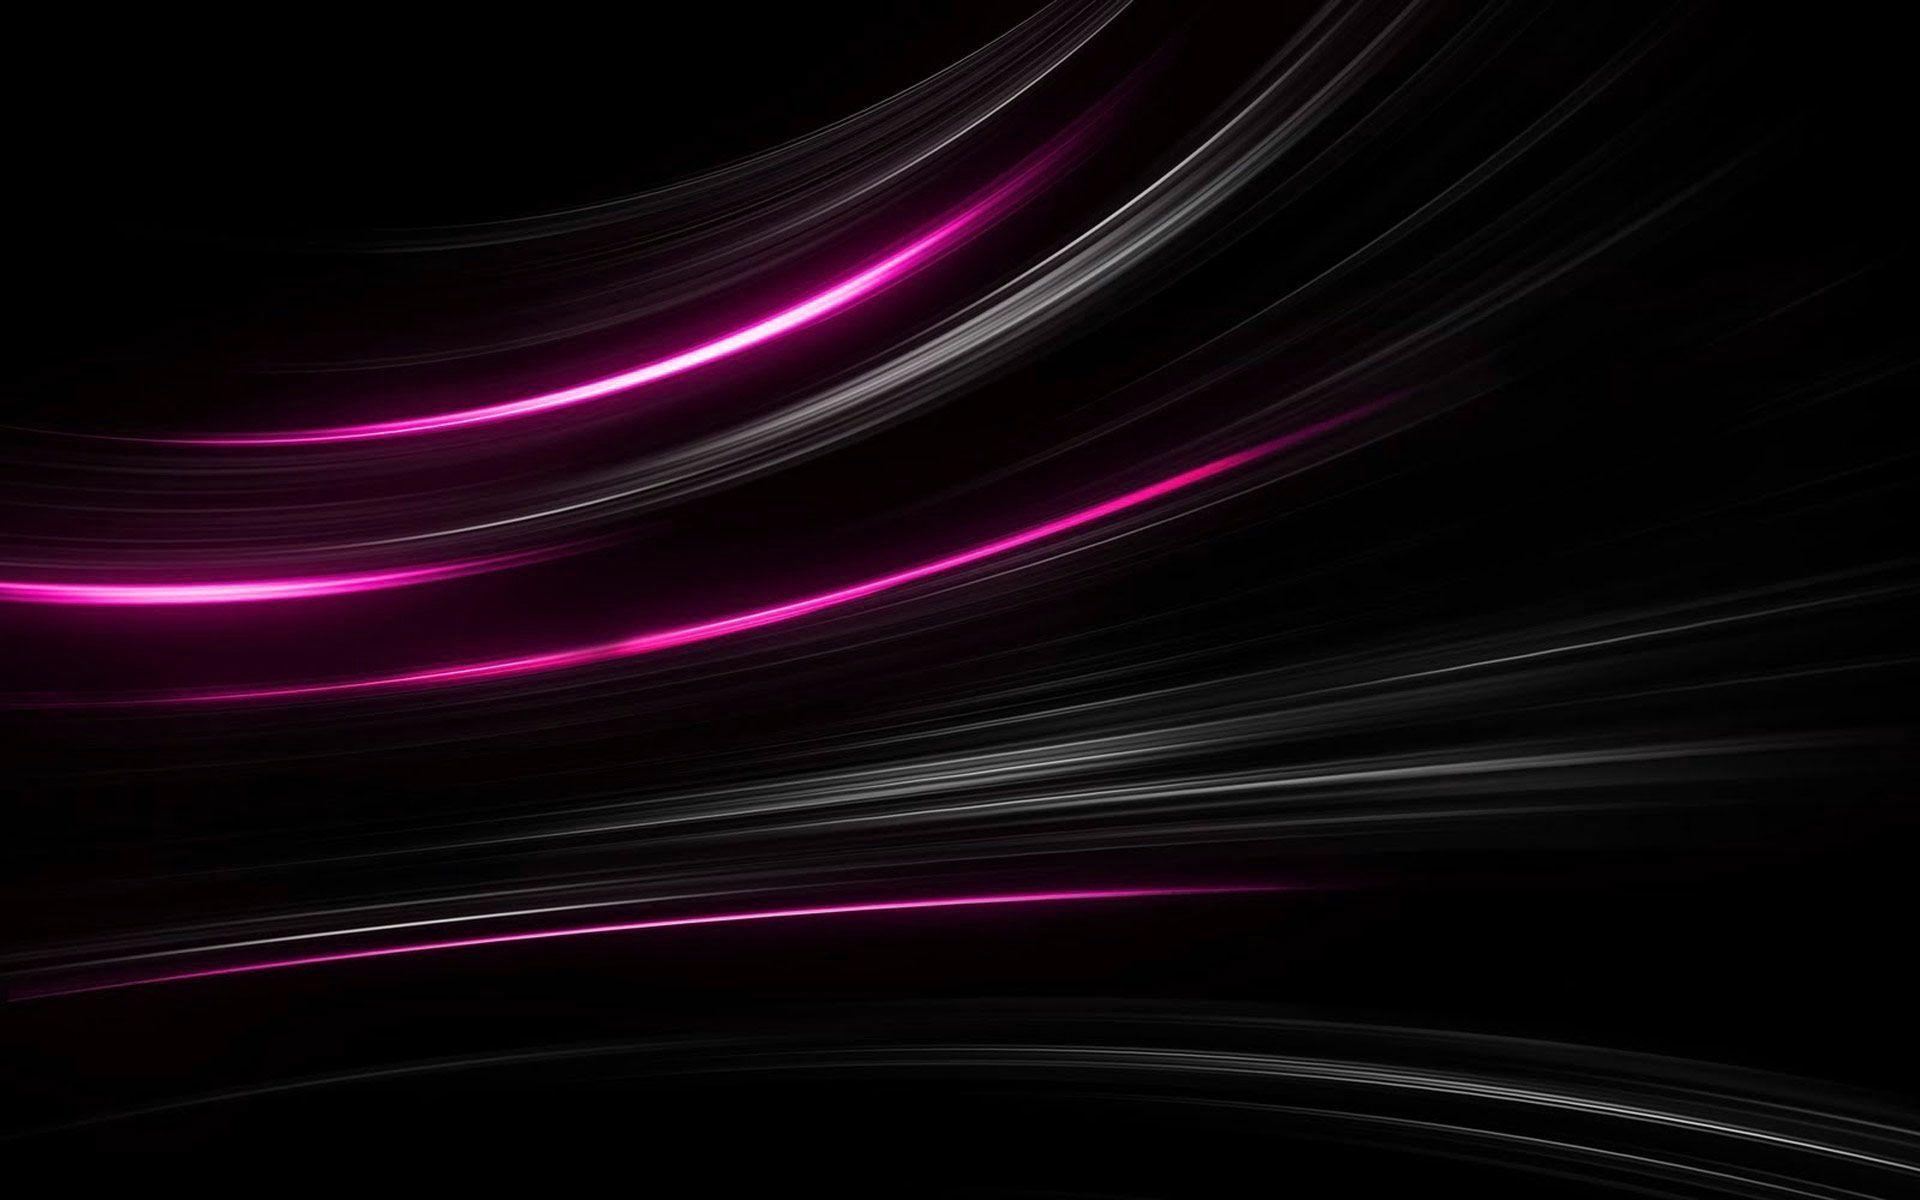 15 Selected dark pink desktop wallpaper You Can Download It free ...